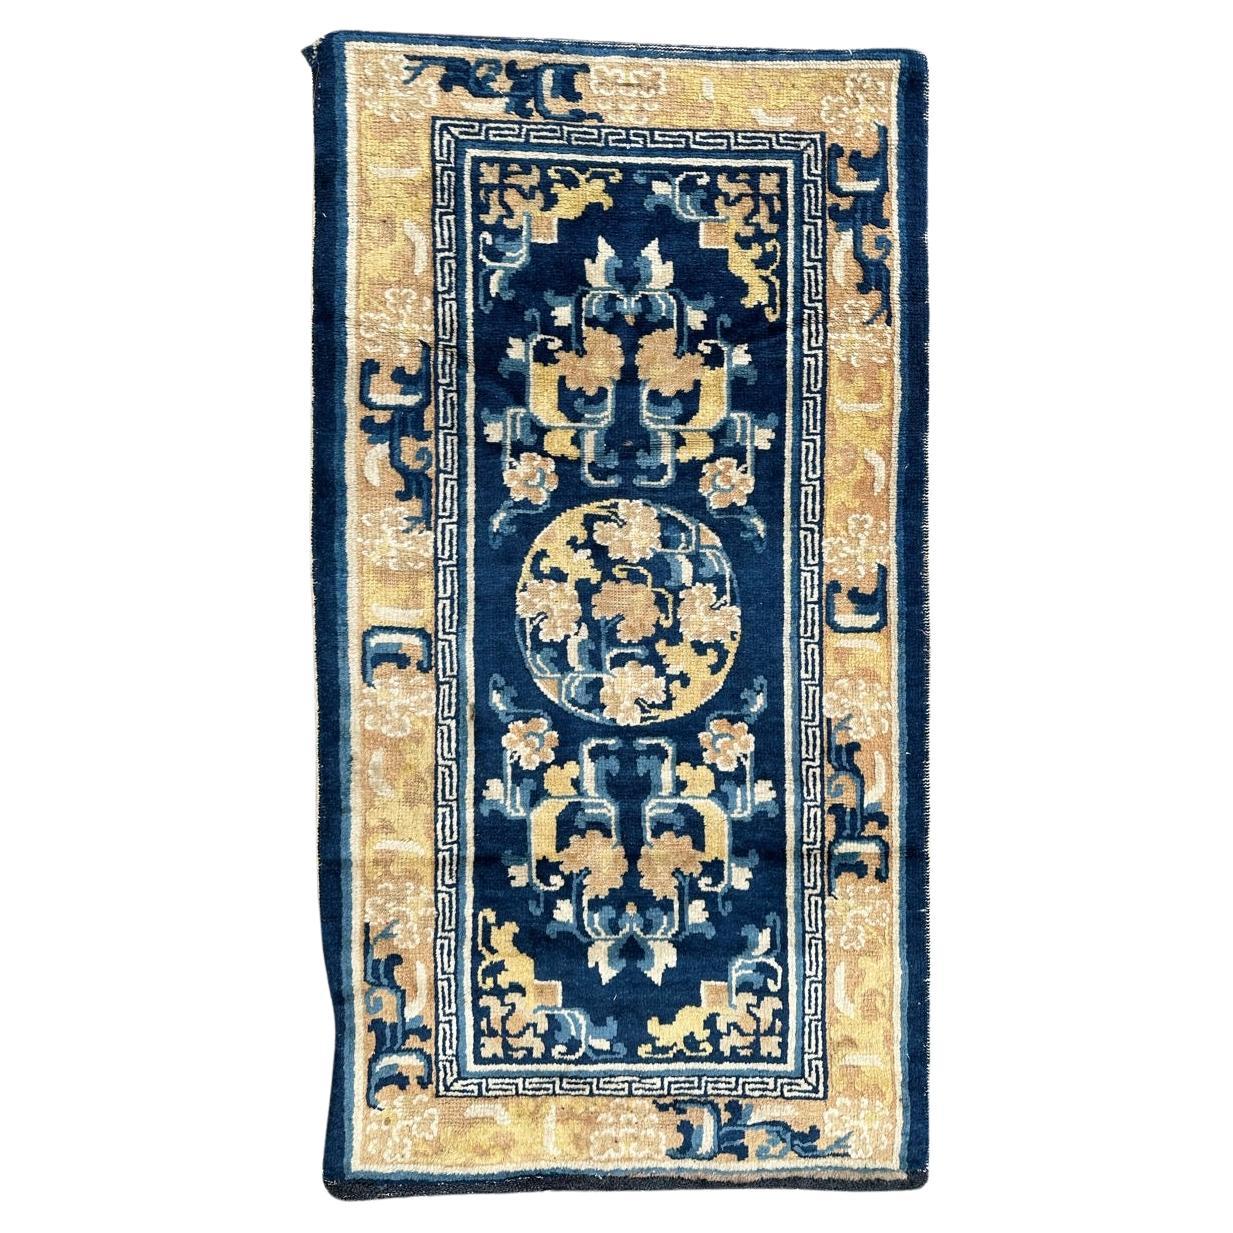 Bobyrug’s pretty rare antique Chinese rug